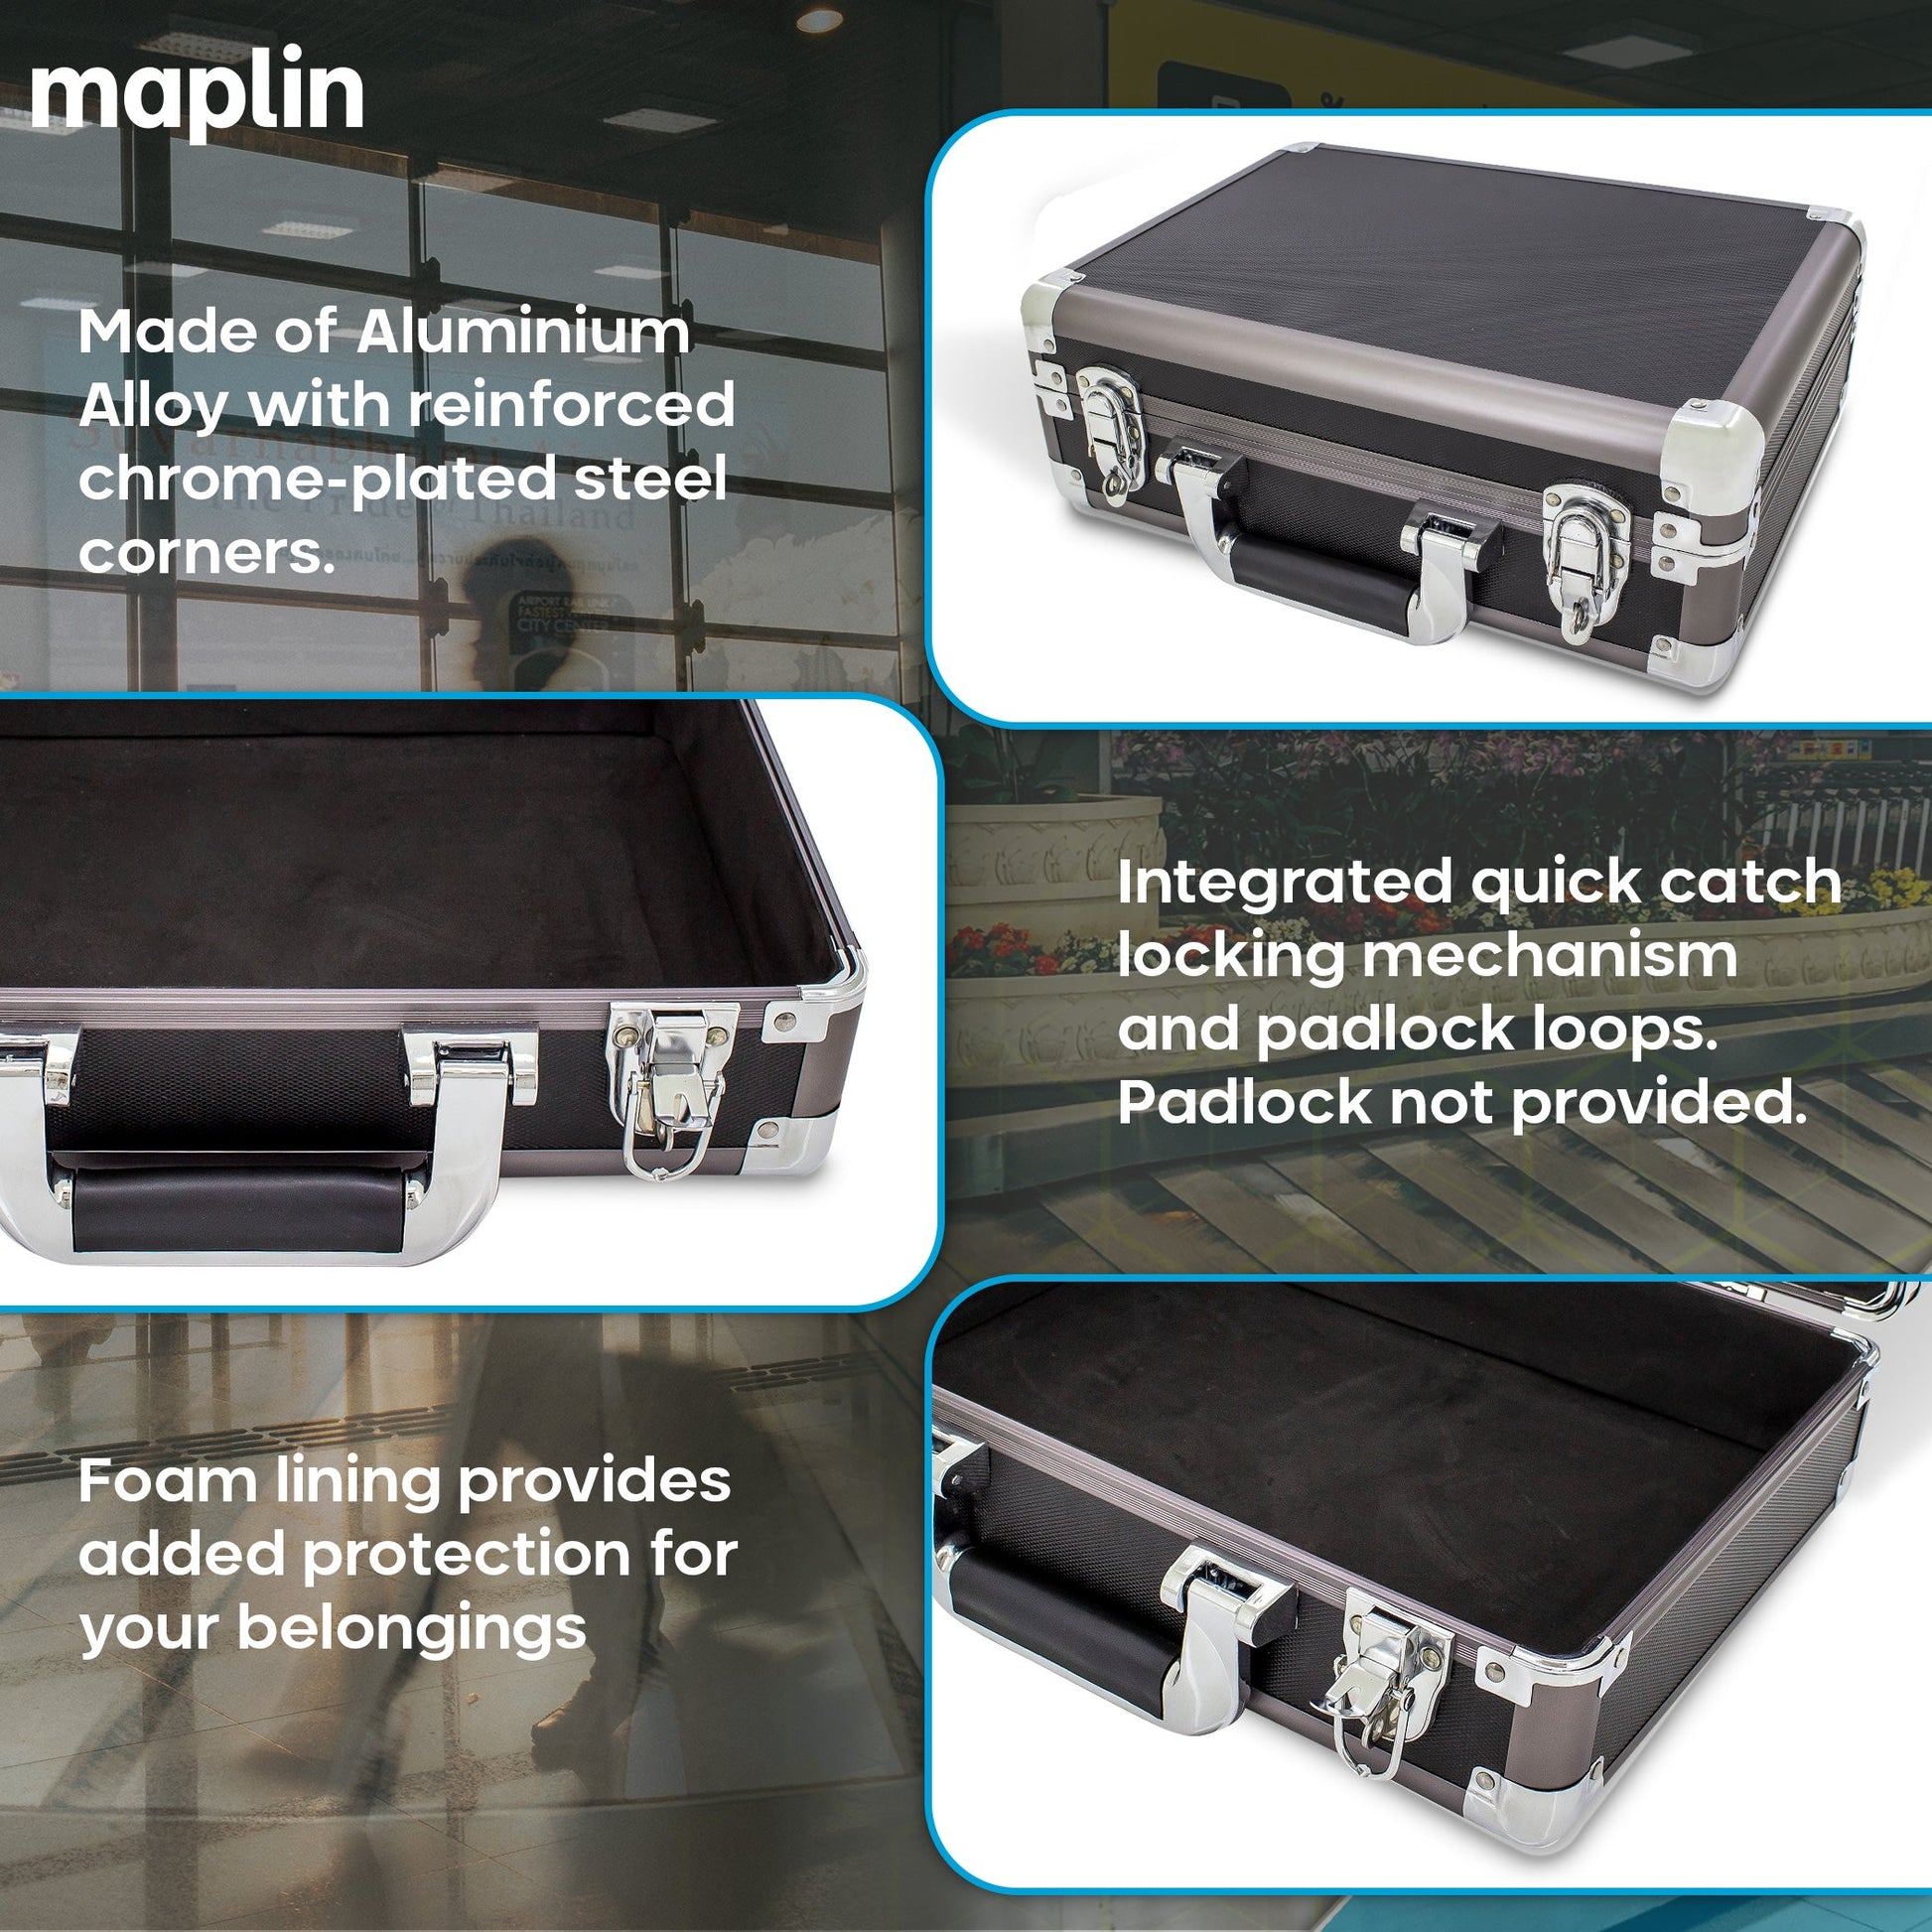 Maplin Plus Aluminium 120 x 340 x 240mm Flight Case - Bronze - maplin.co.uk